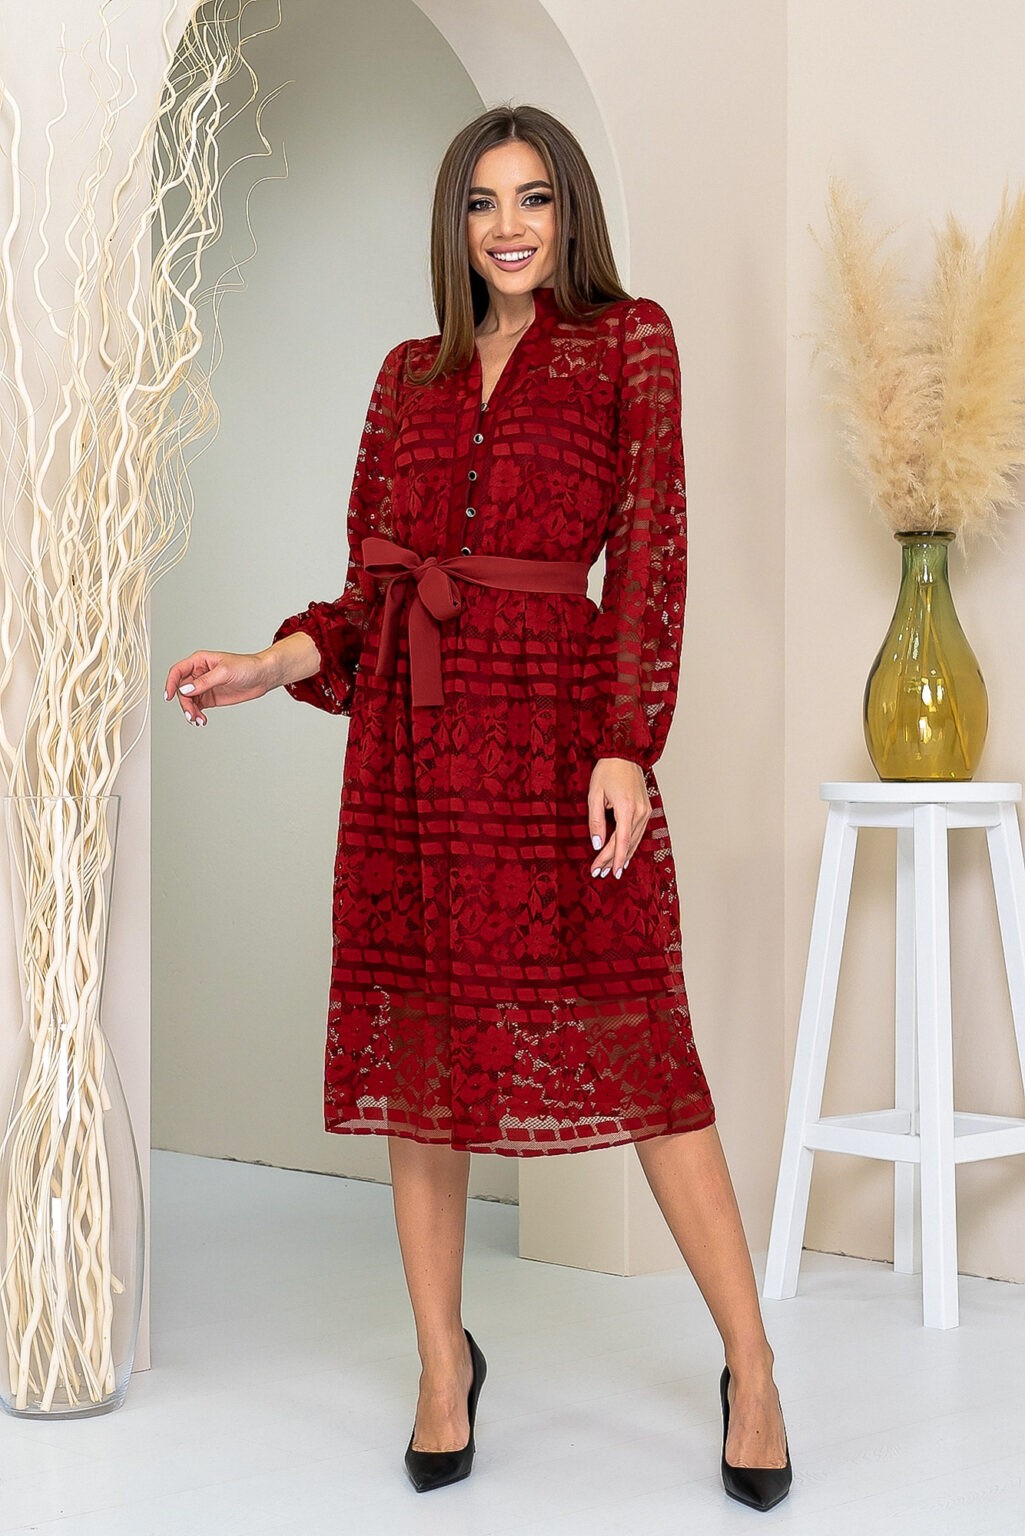 Casual burgundy dress by Tanita-Romario